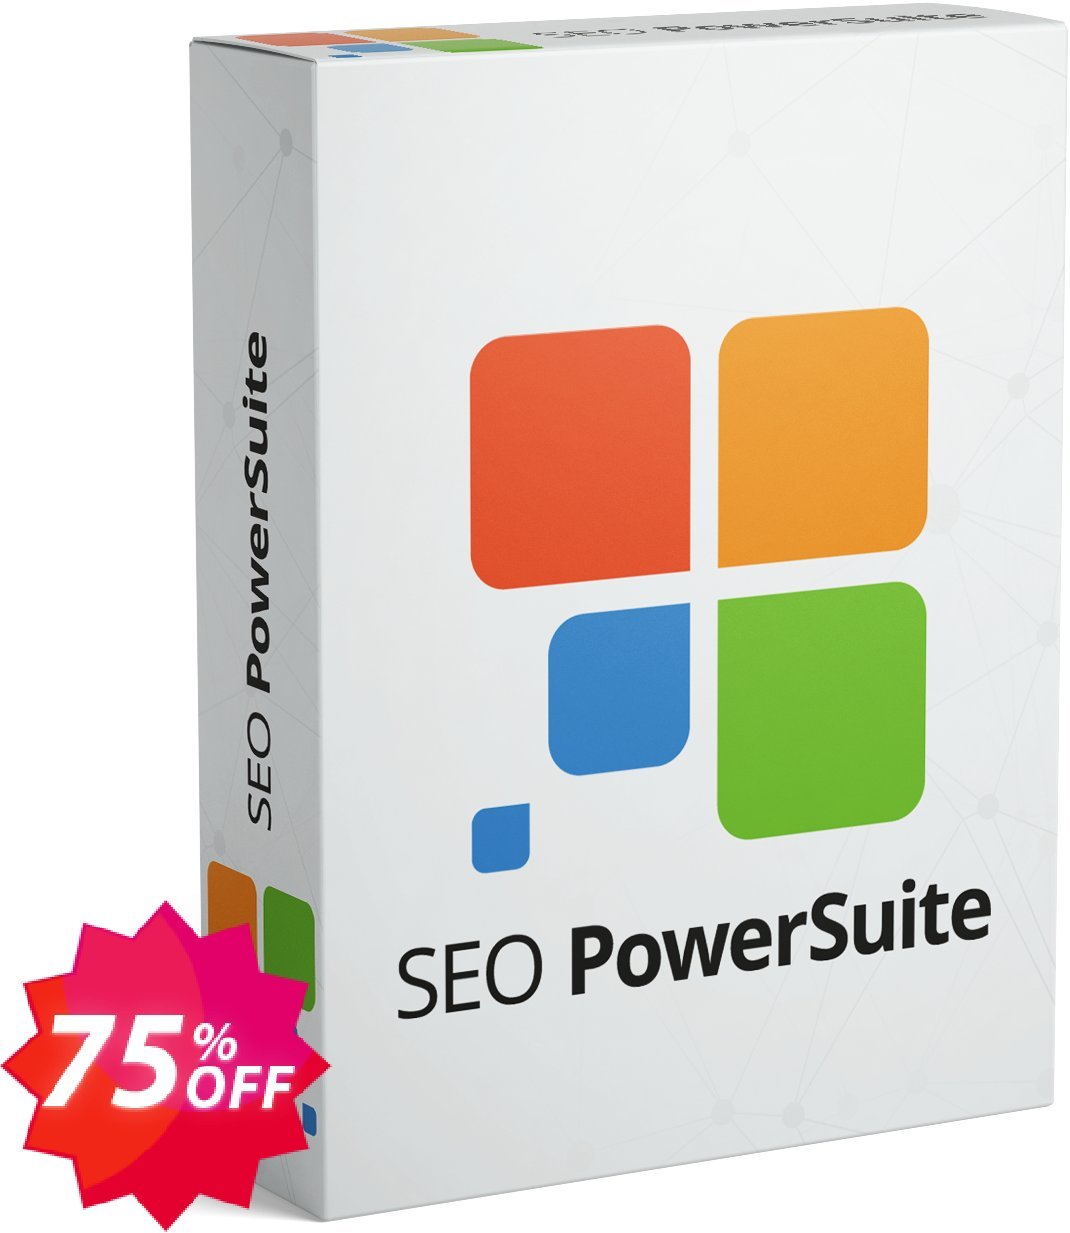 SEO PowerSuite Enterprise Coupon code 75% discount 